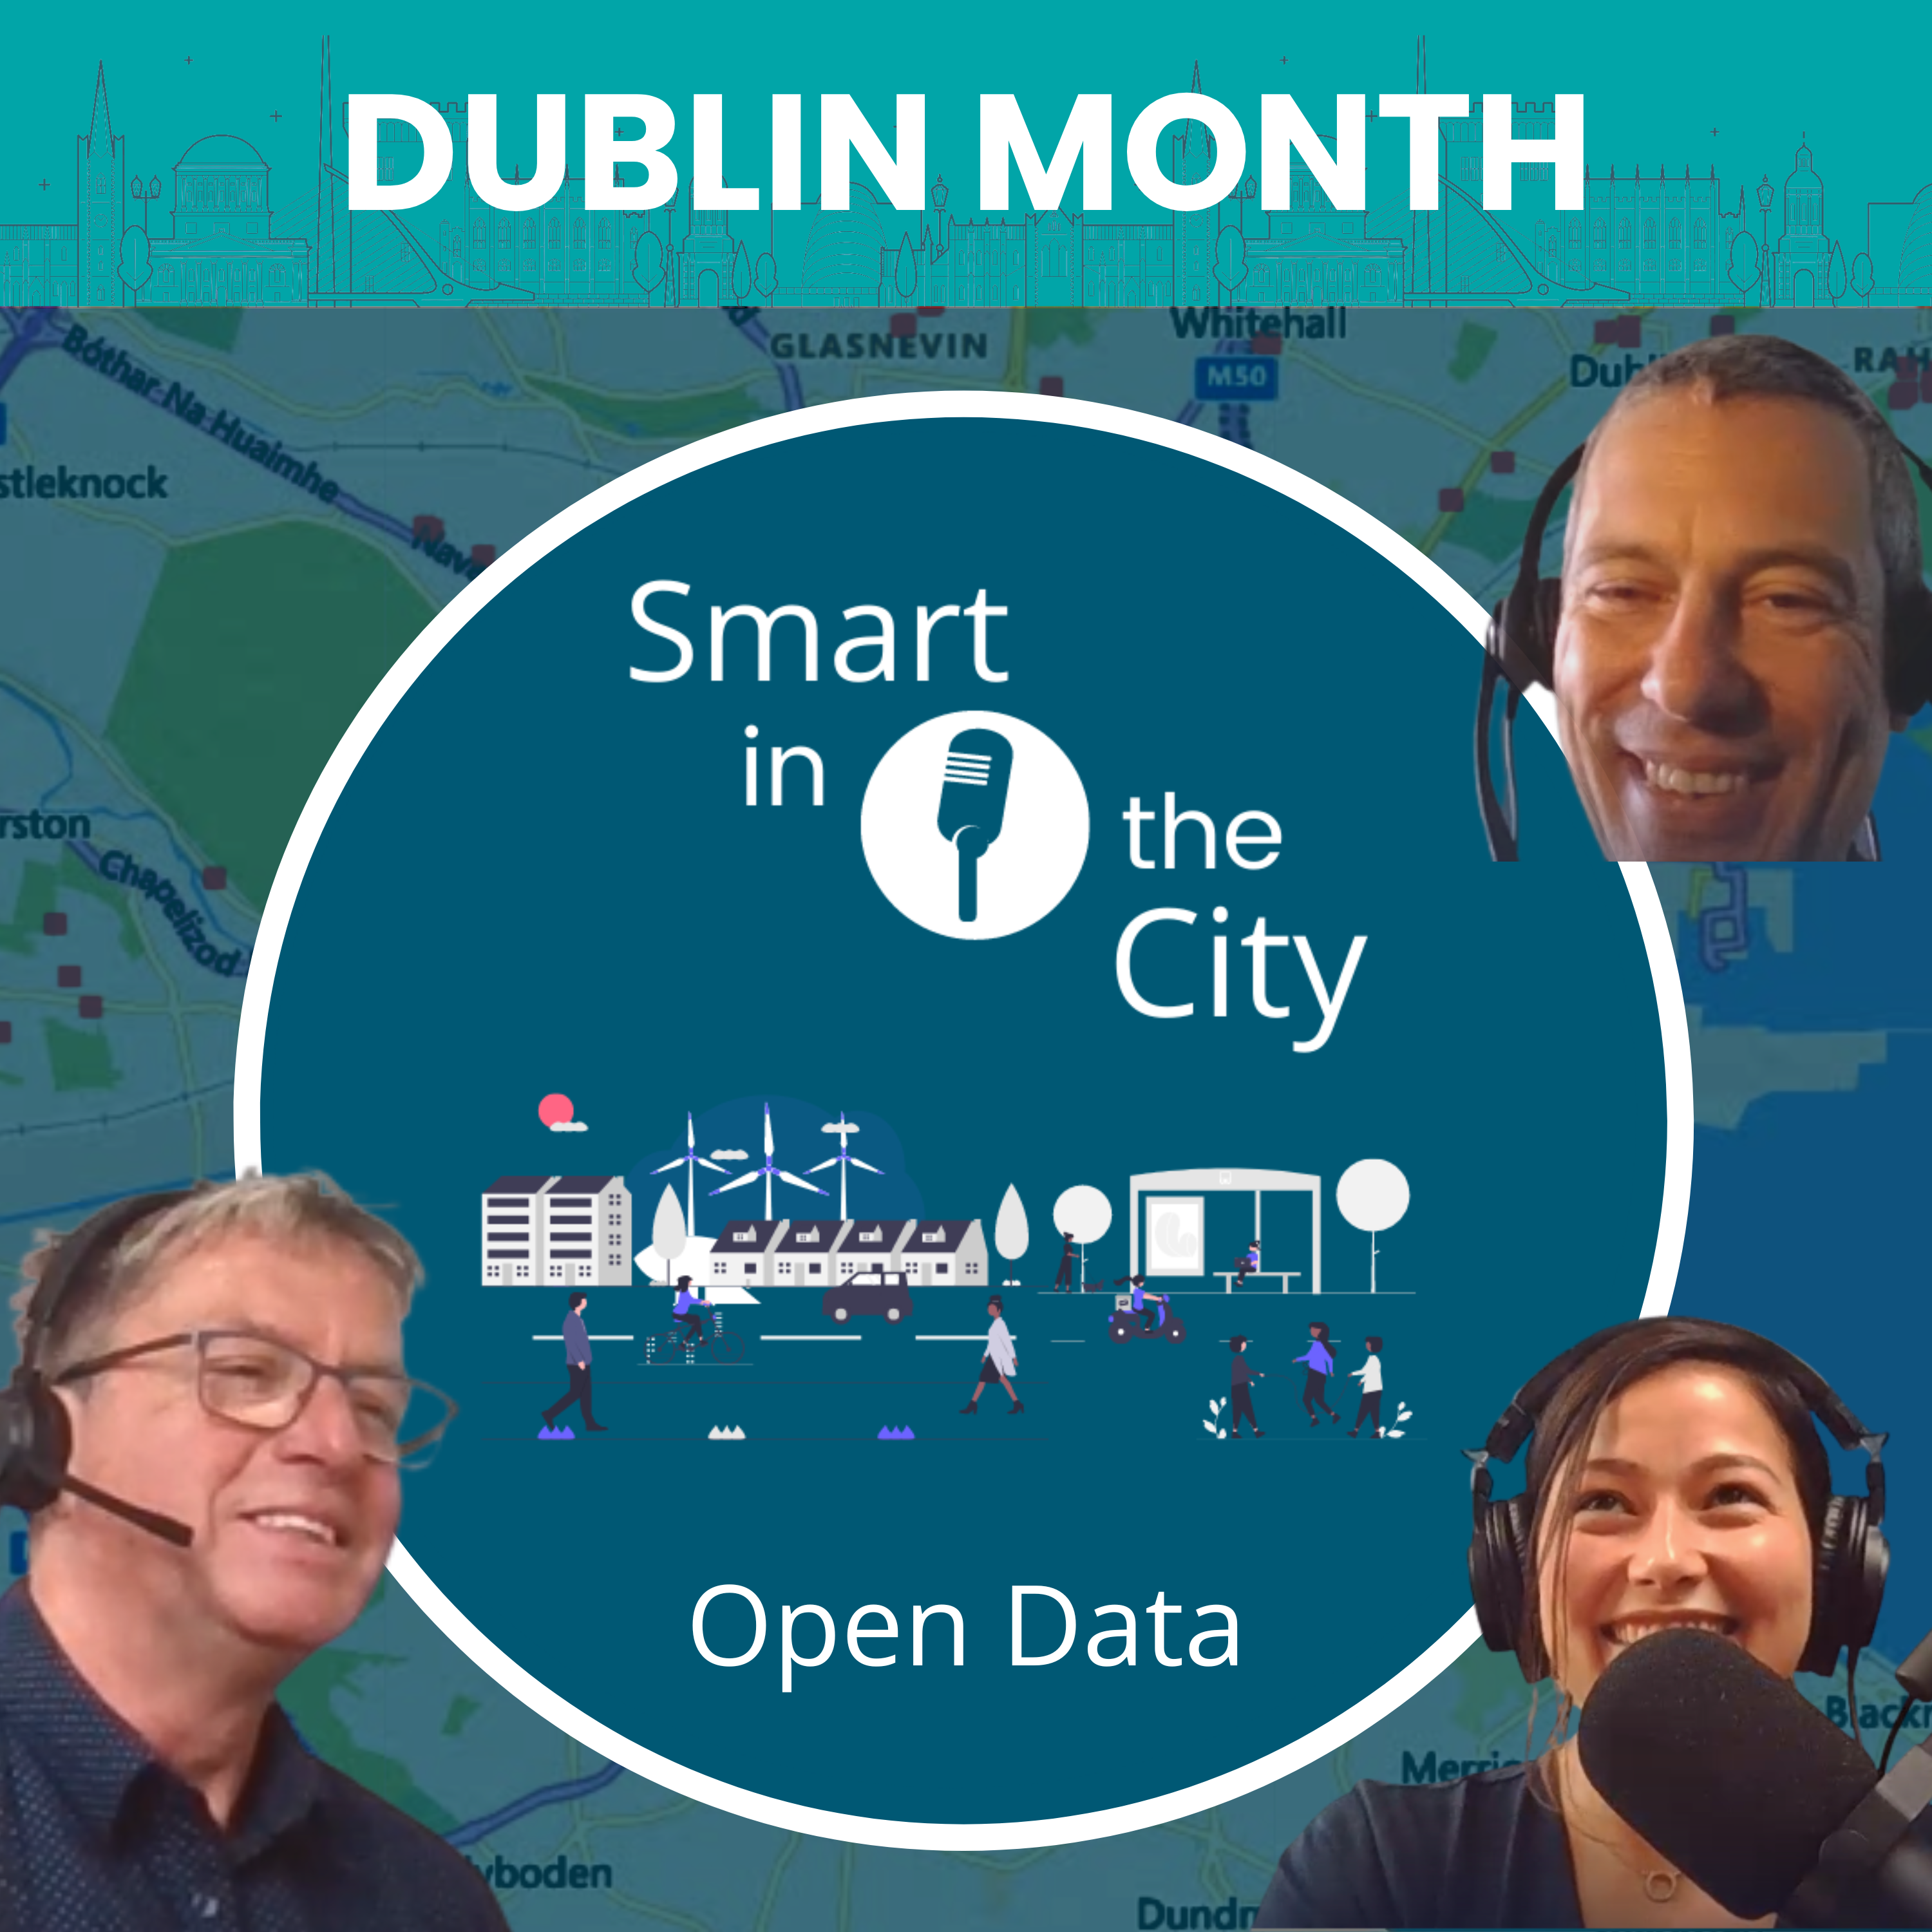 Dublin Month #2 - Open Data: "The backbone of Smart City projects"